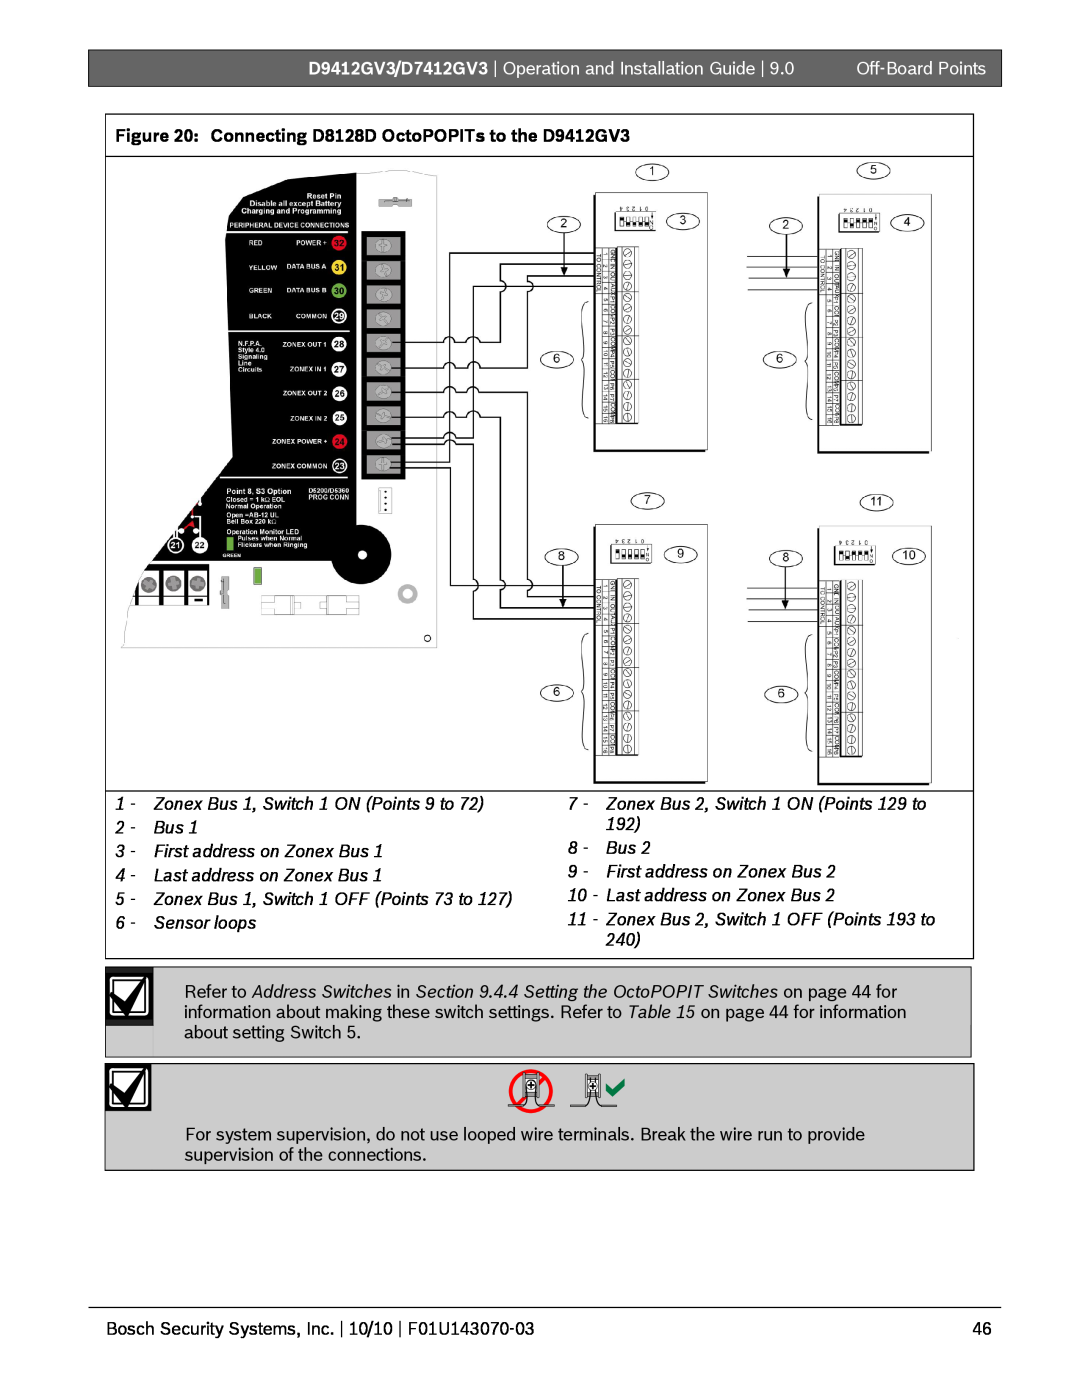 Bosch Appliances D9412GV3, D7412GV3 manual Off-BoardPoints 